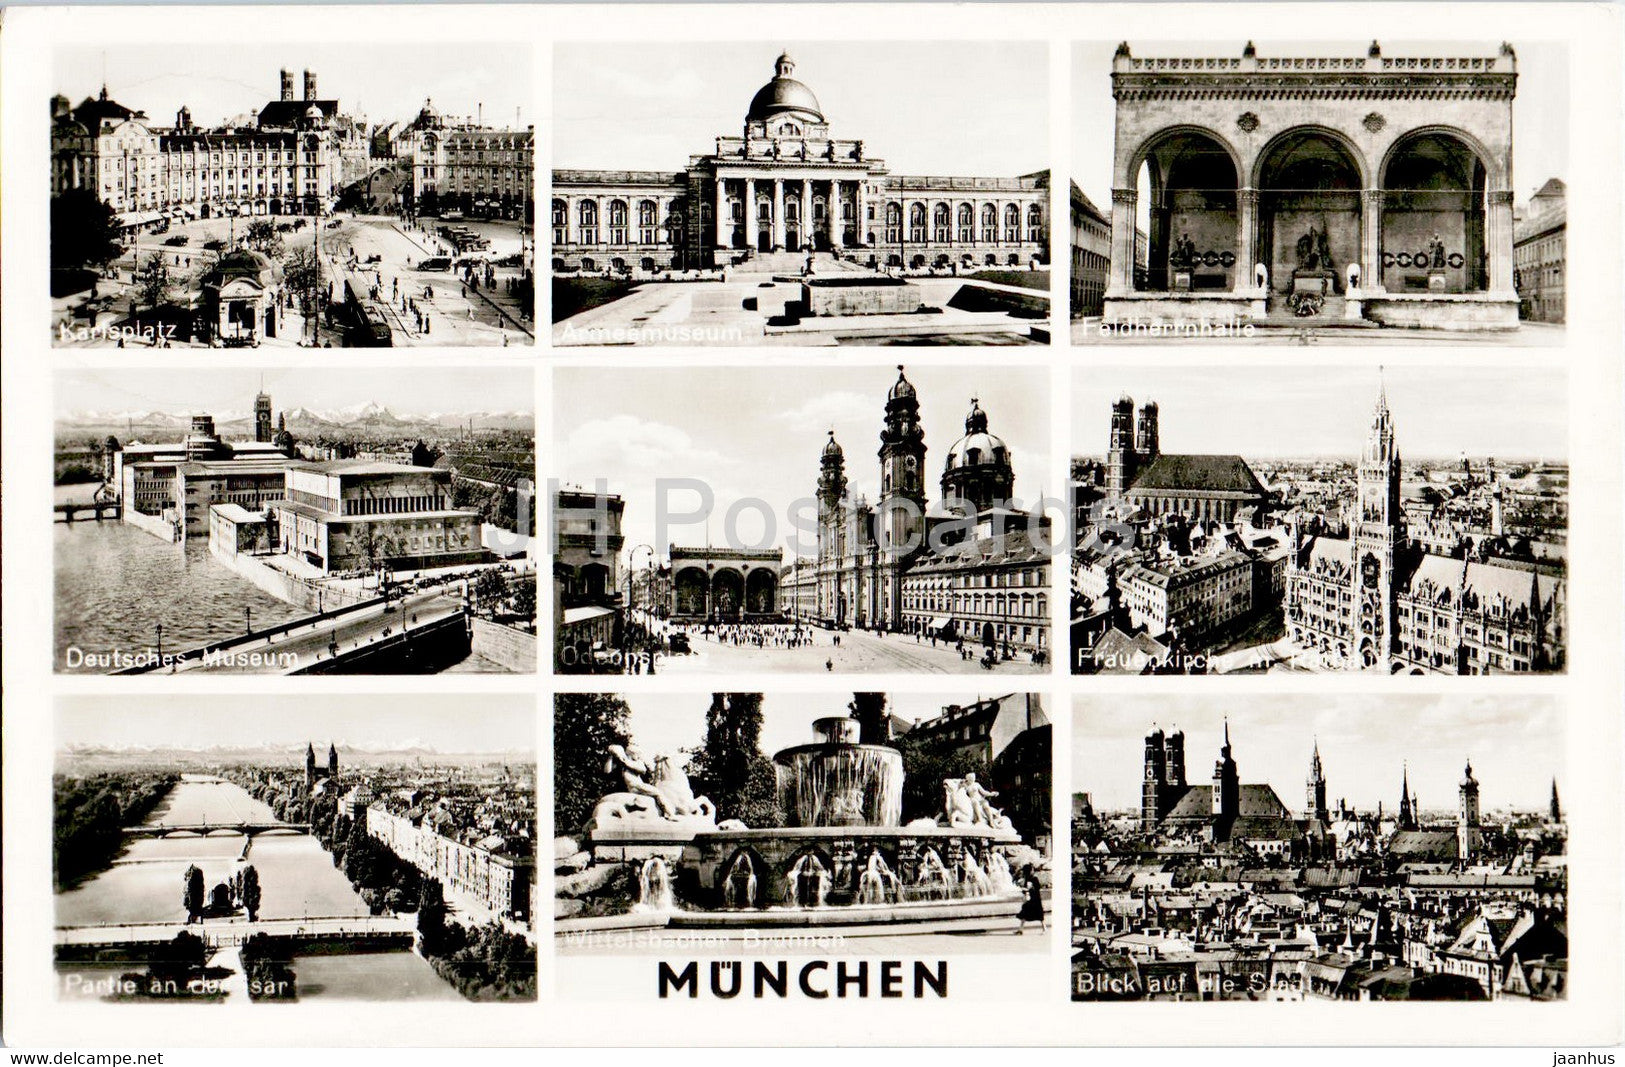 Munchen - Karlsplatz - Armeemuseum - Deutsches Museum - Feldherrnhalle - old postcard - 1952 - Germany - used - JH Postcards